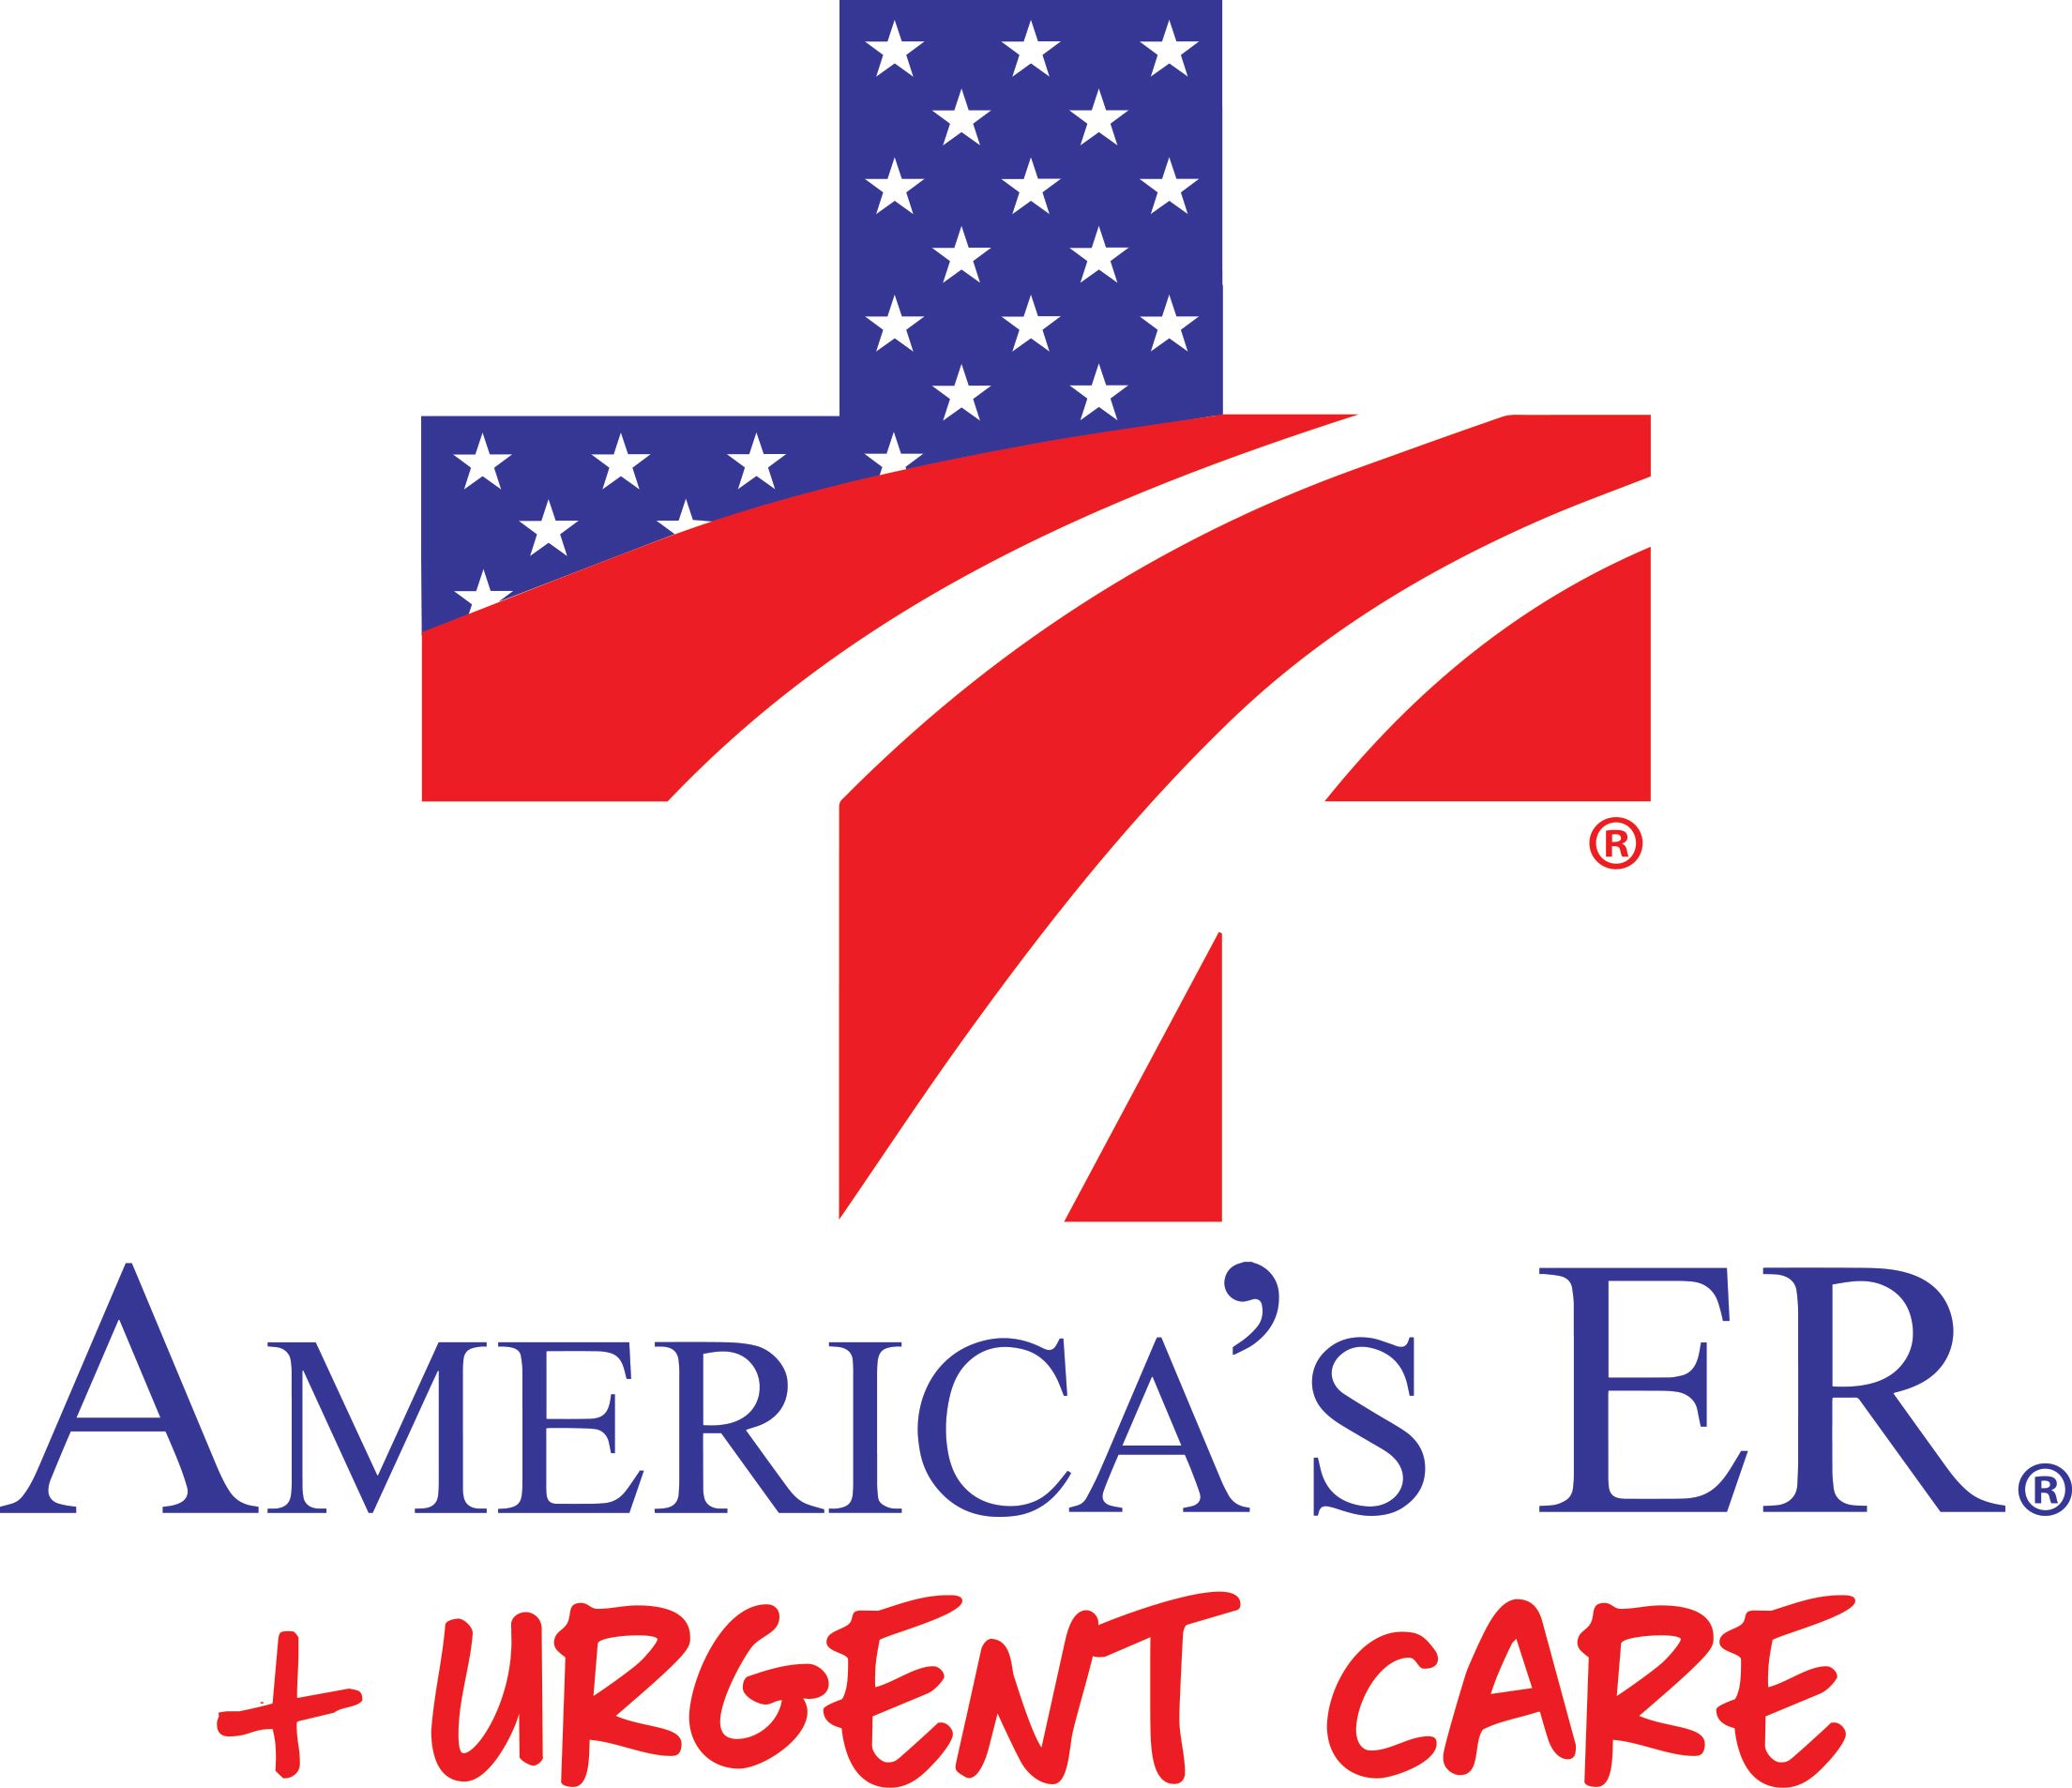 America's ER and Urgent Care